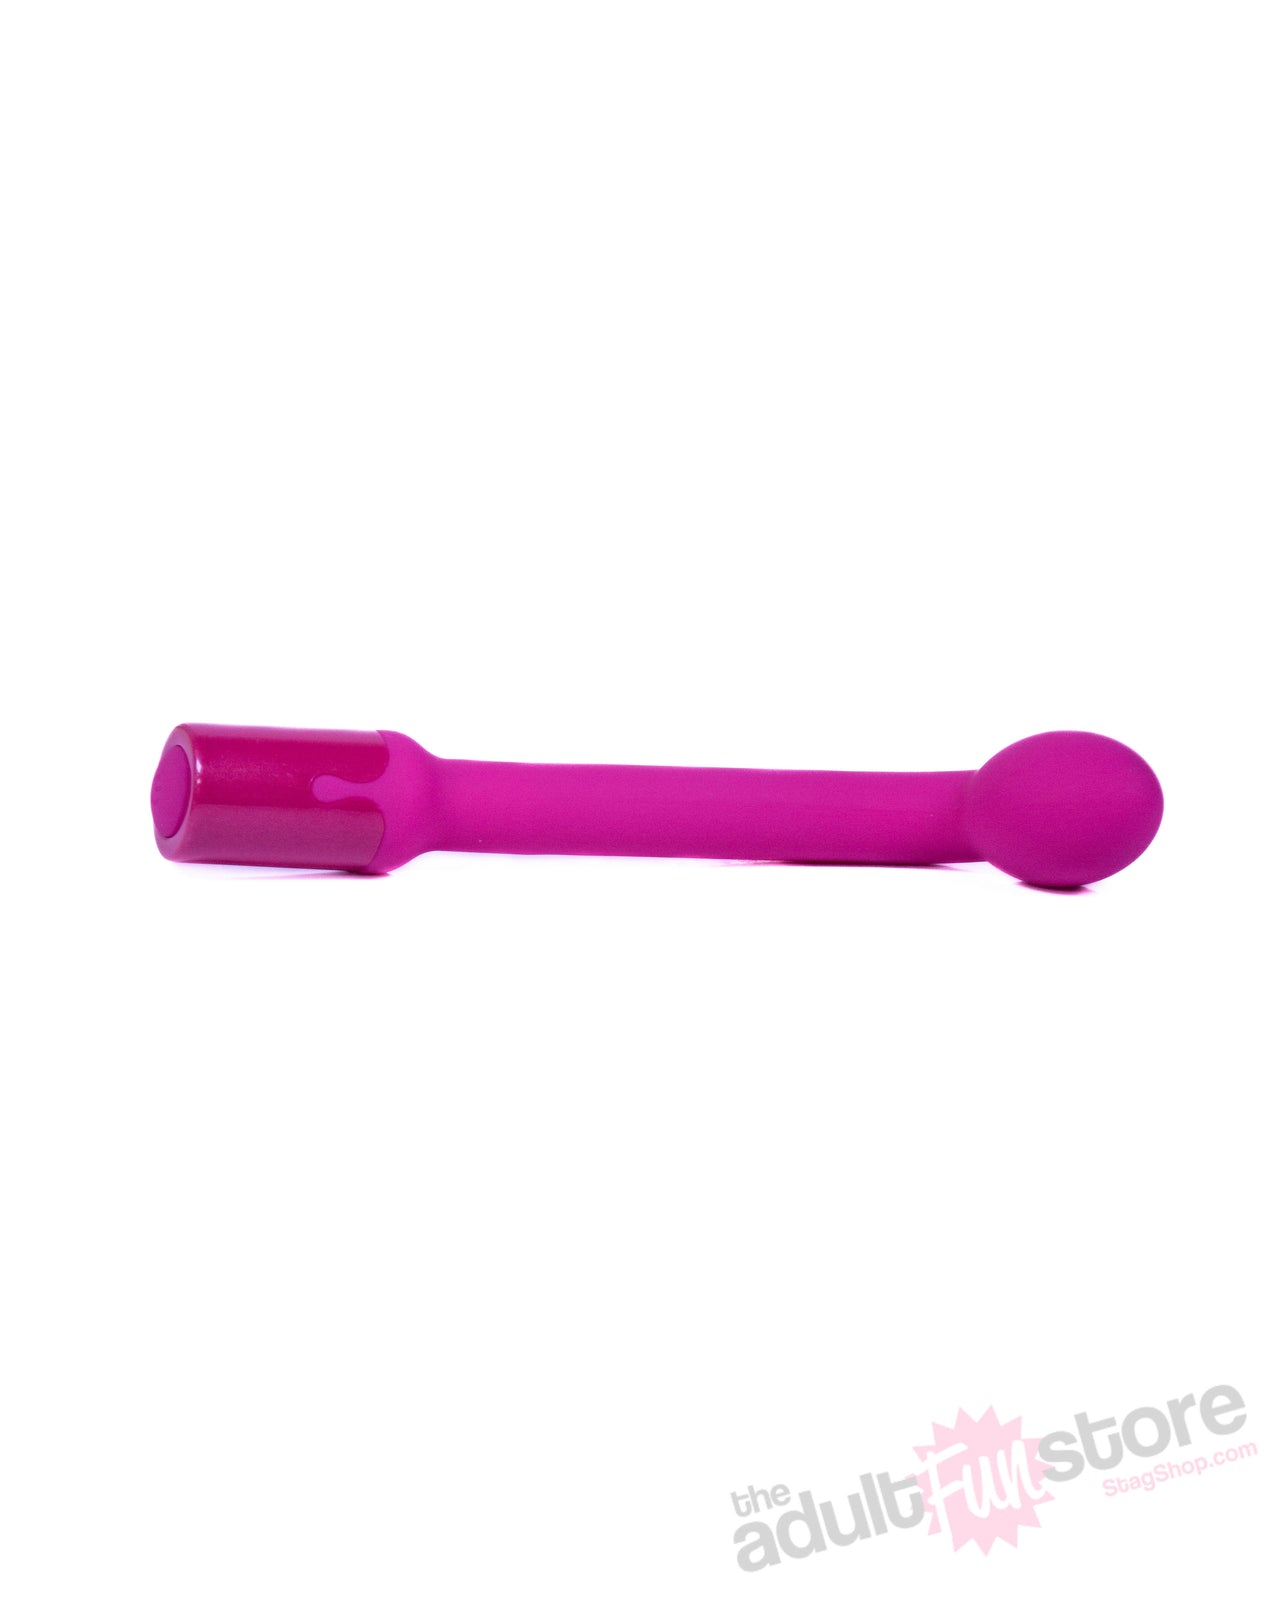 NS Novelties - INYA - Oh My G - G-spot Vibrator - Pink - Stag Shop